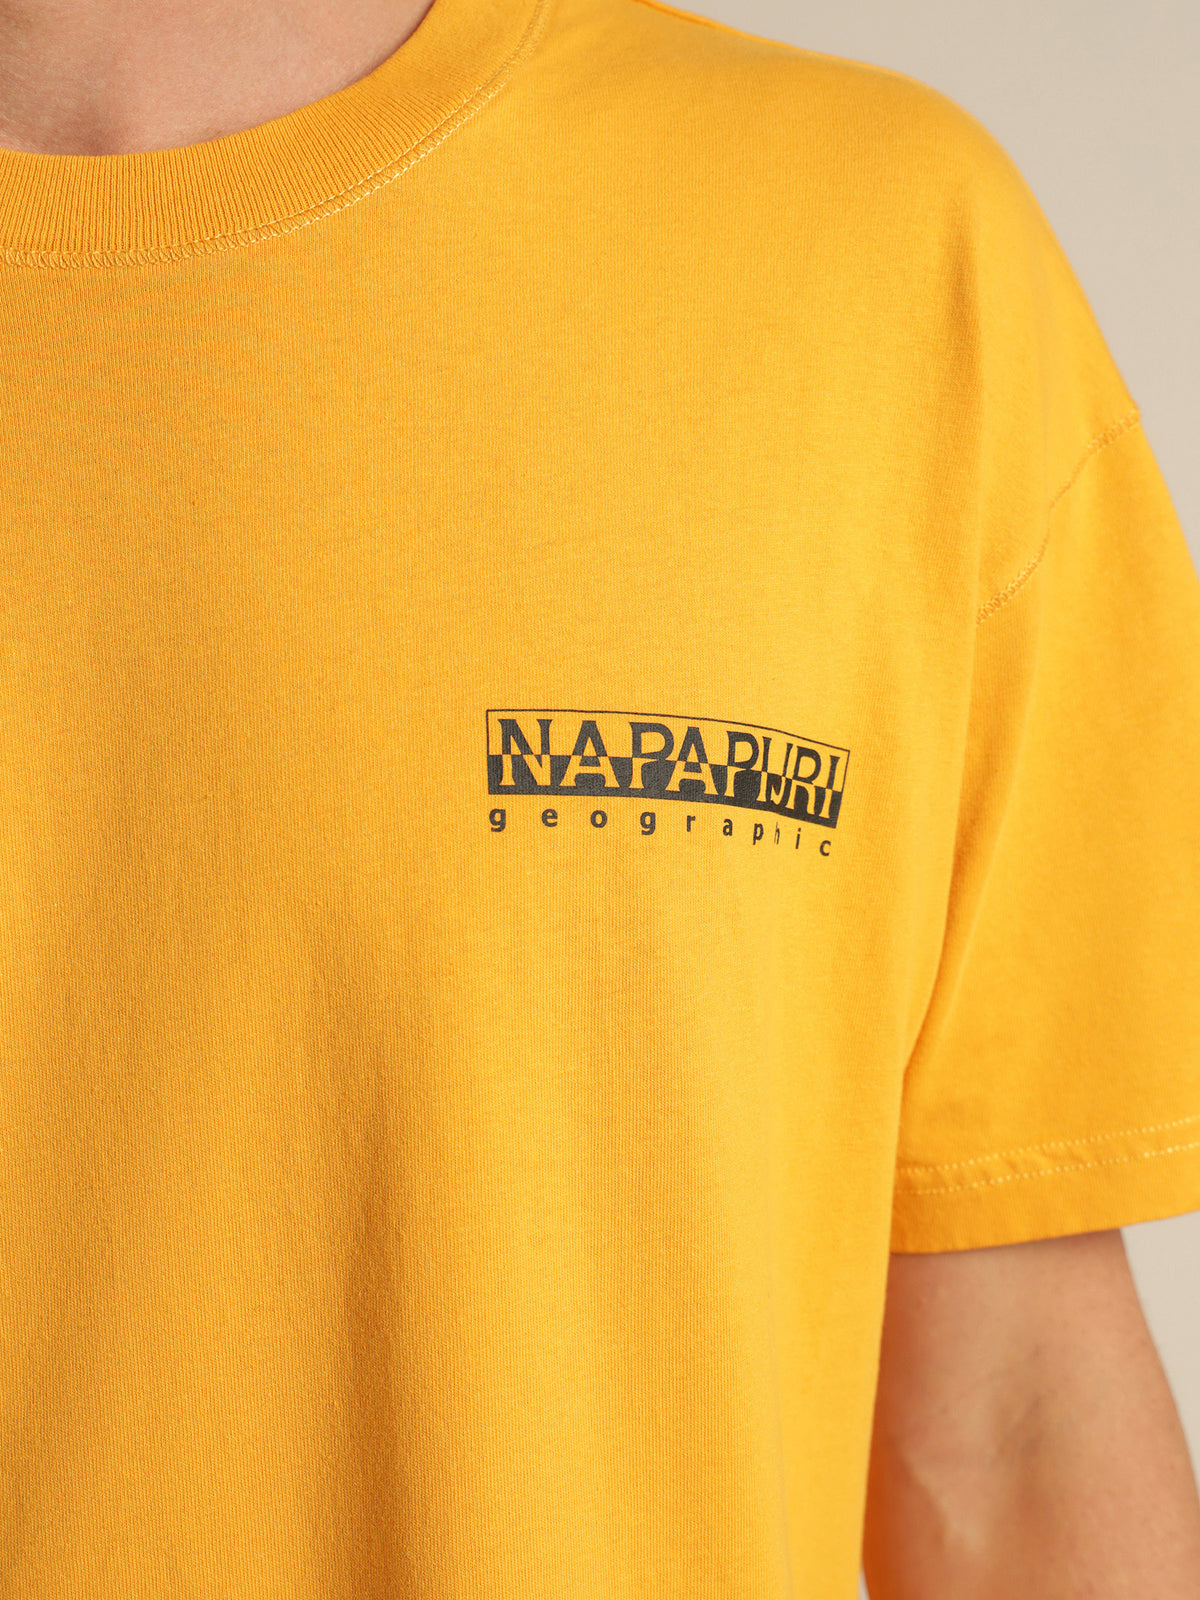 S Yolk T-Shirt in Yellow